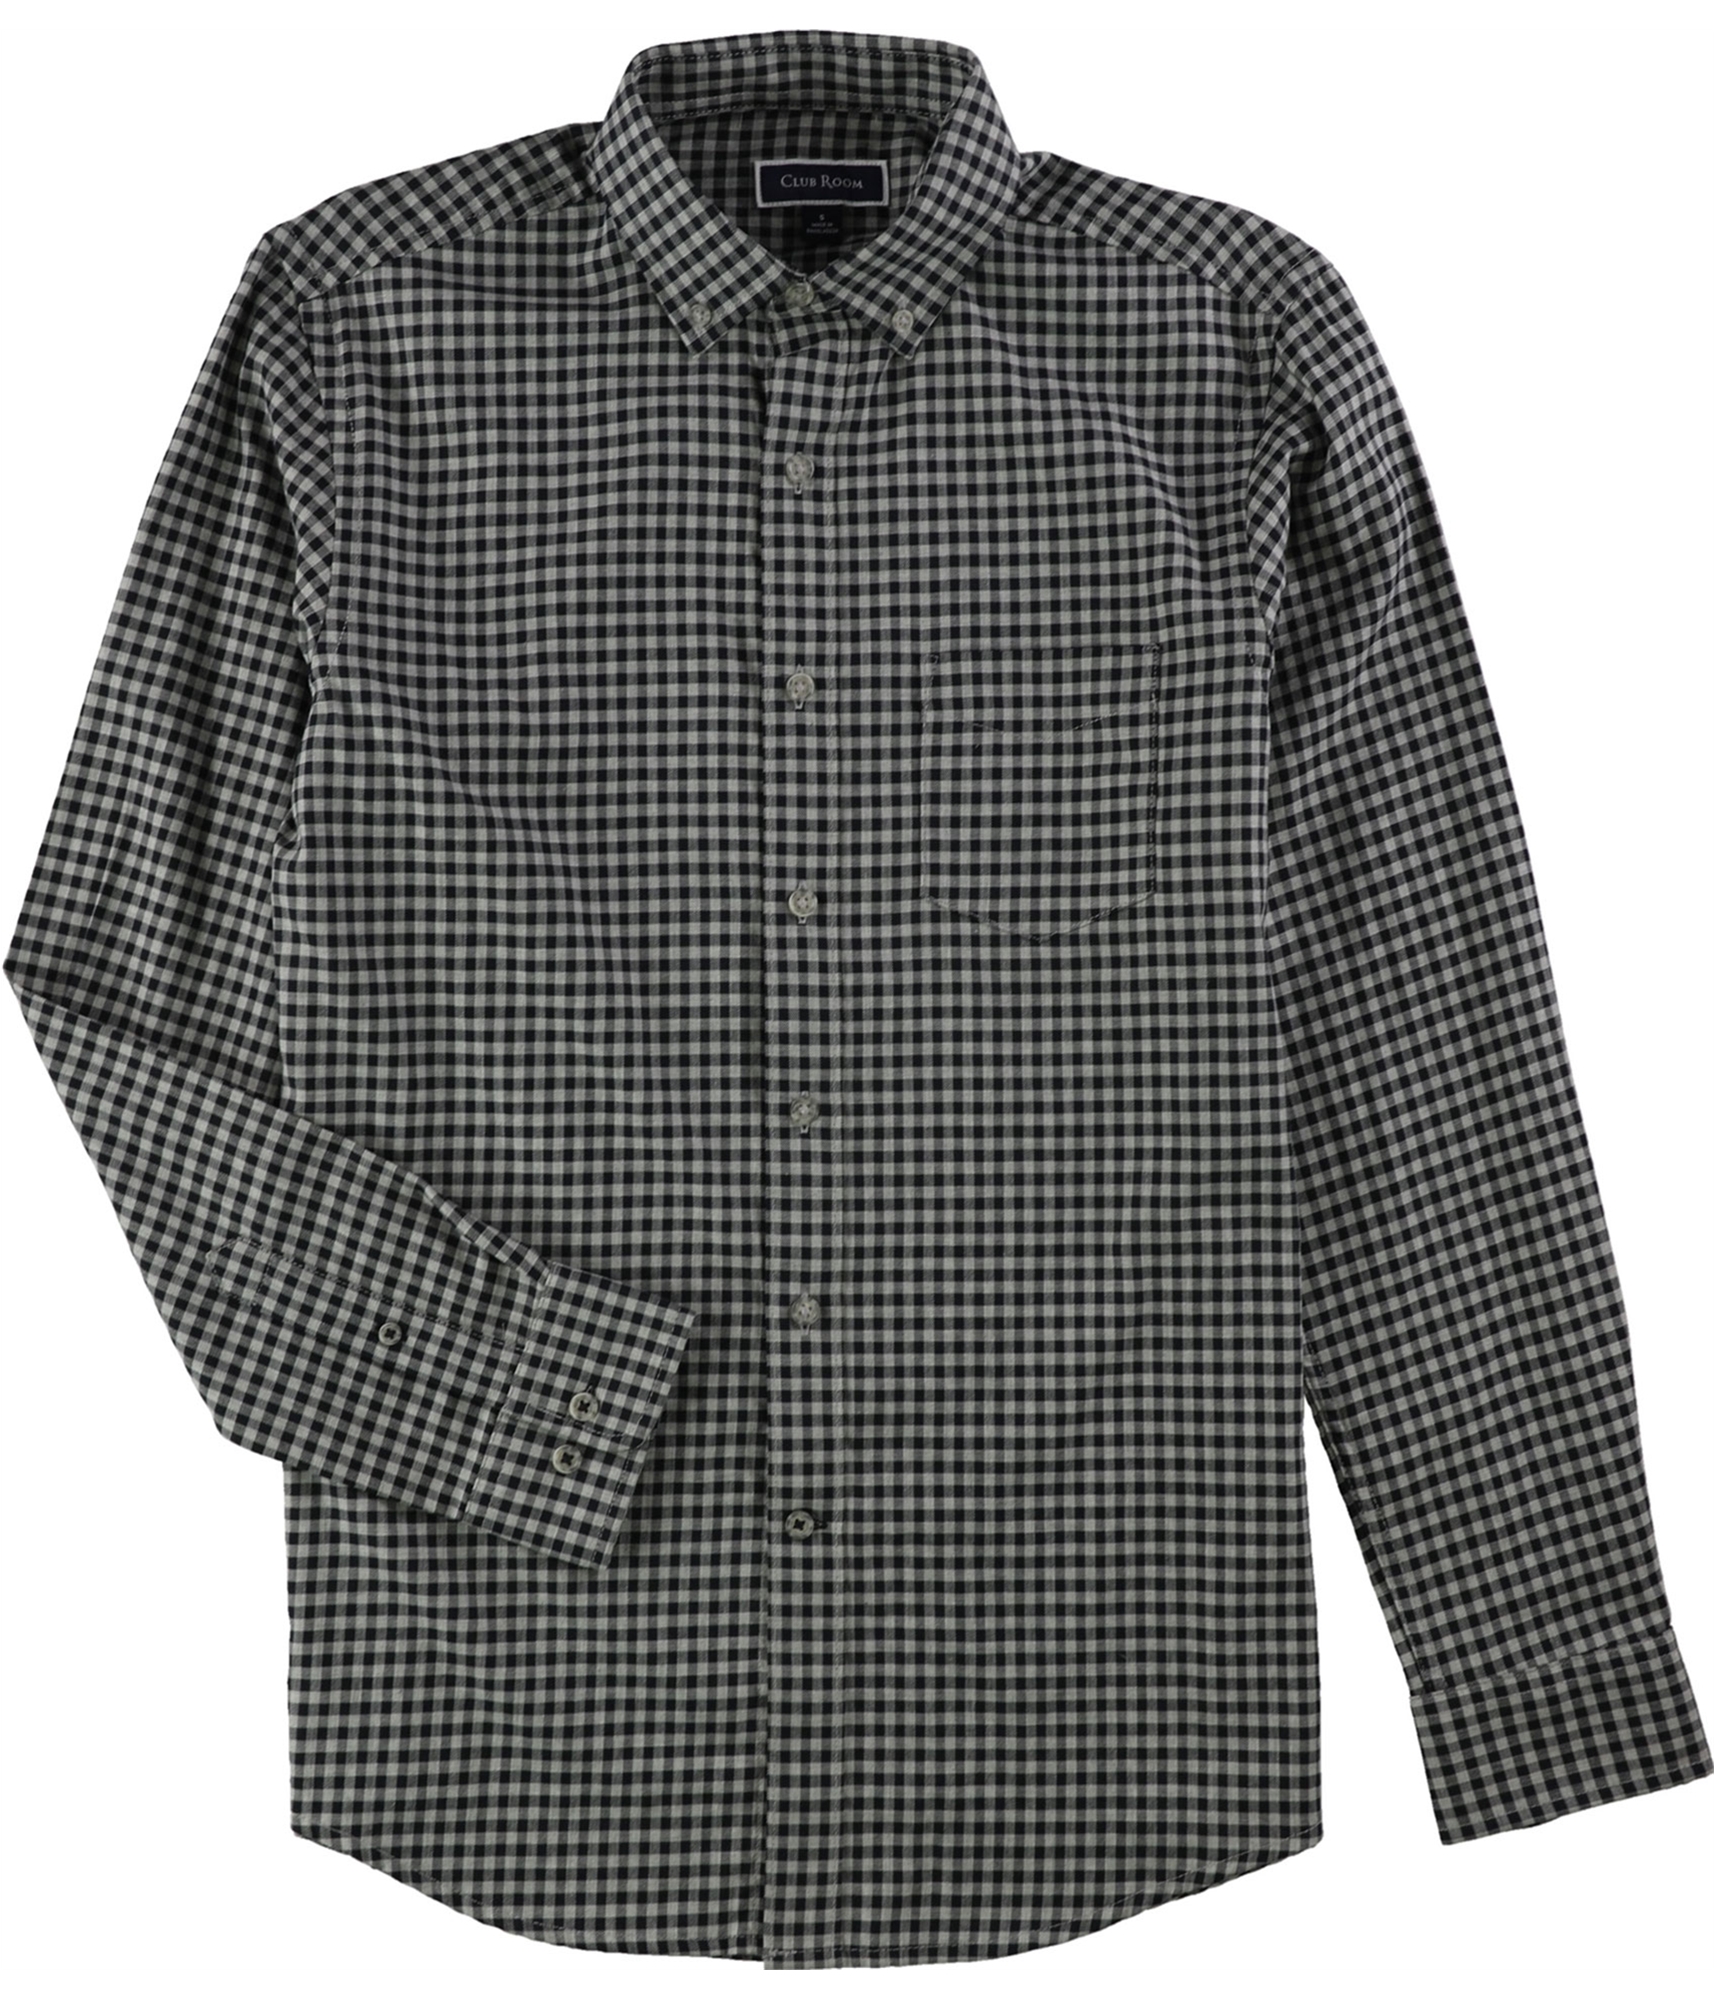 Club Room Mens Checkered Button Up Shirt, Grey, Small | eBay